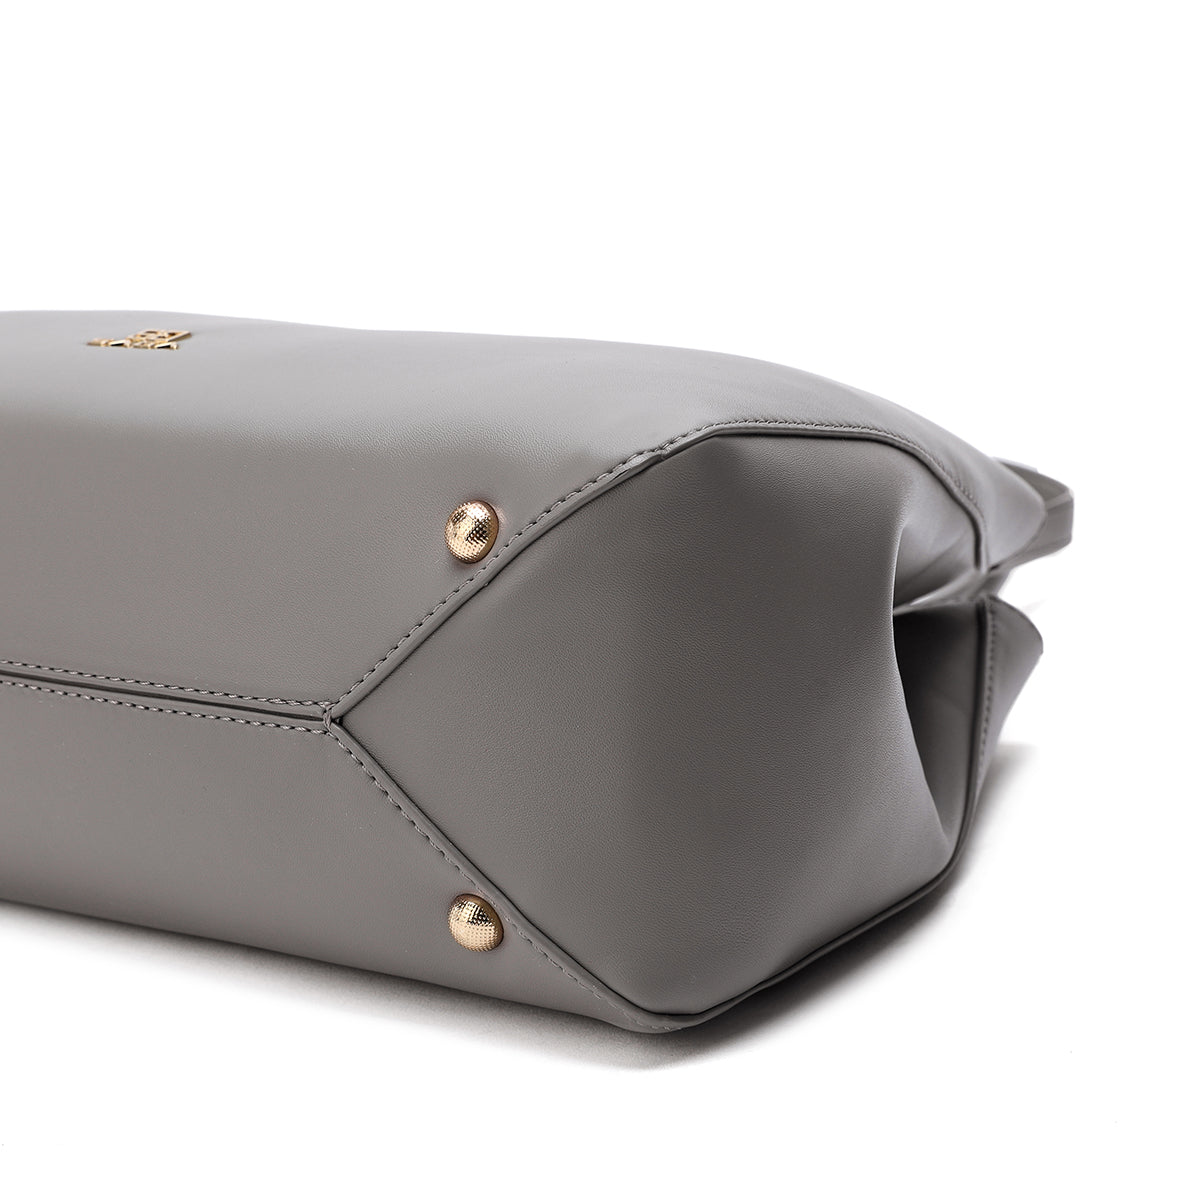 Elegant handbag, simple design, wide, 35cm wide, in three colors